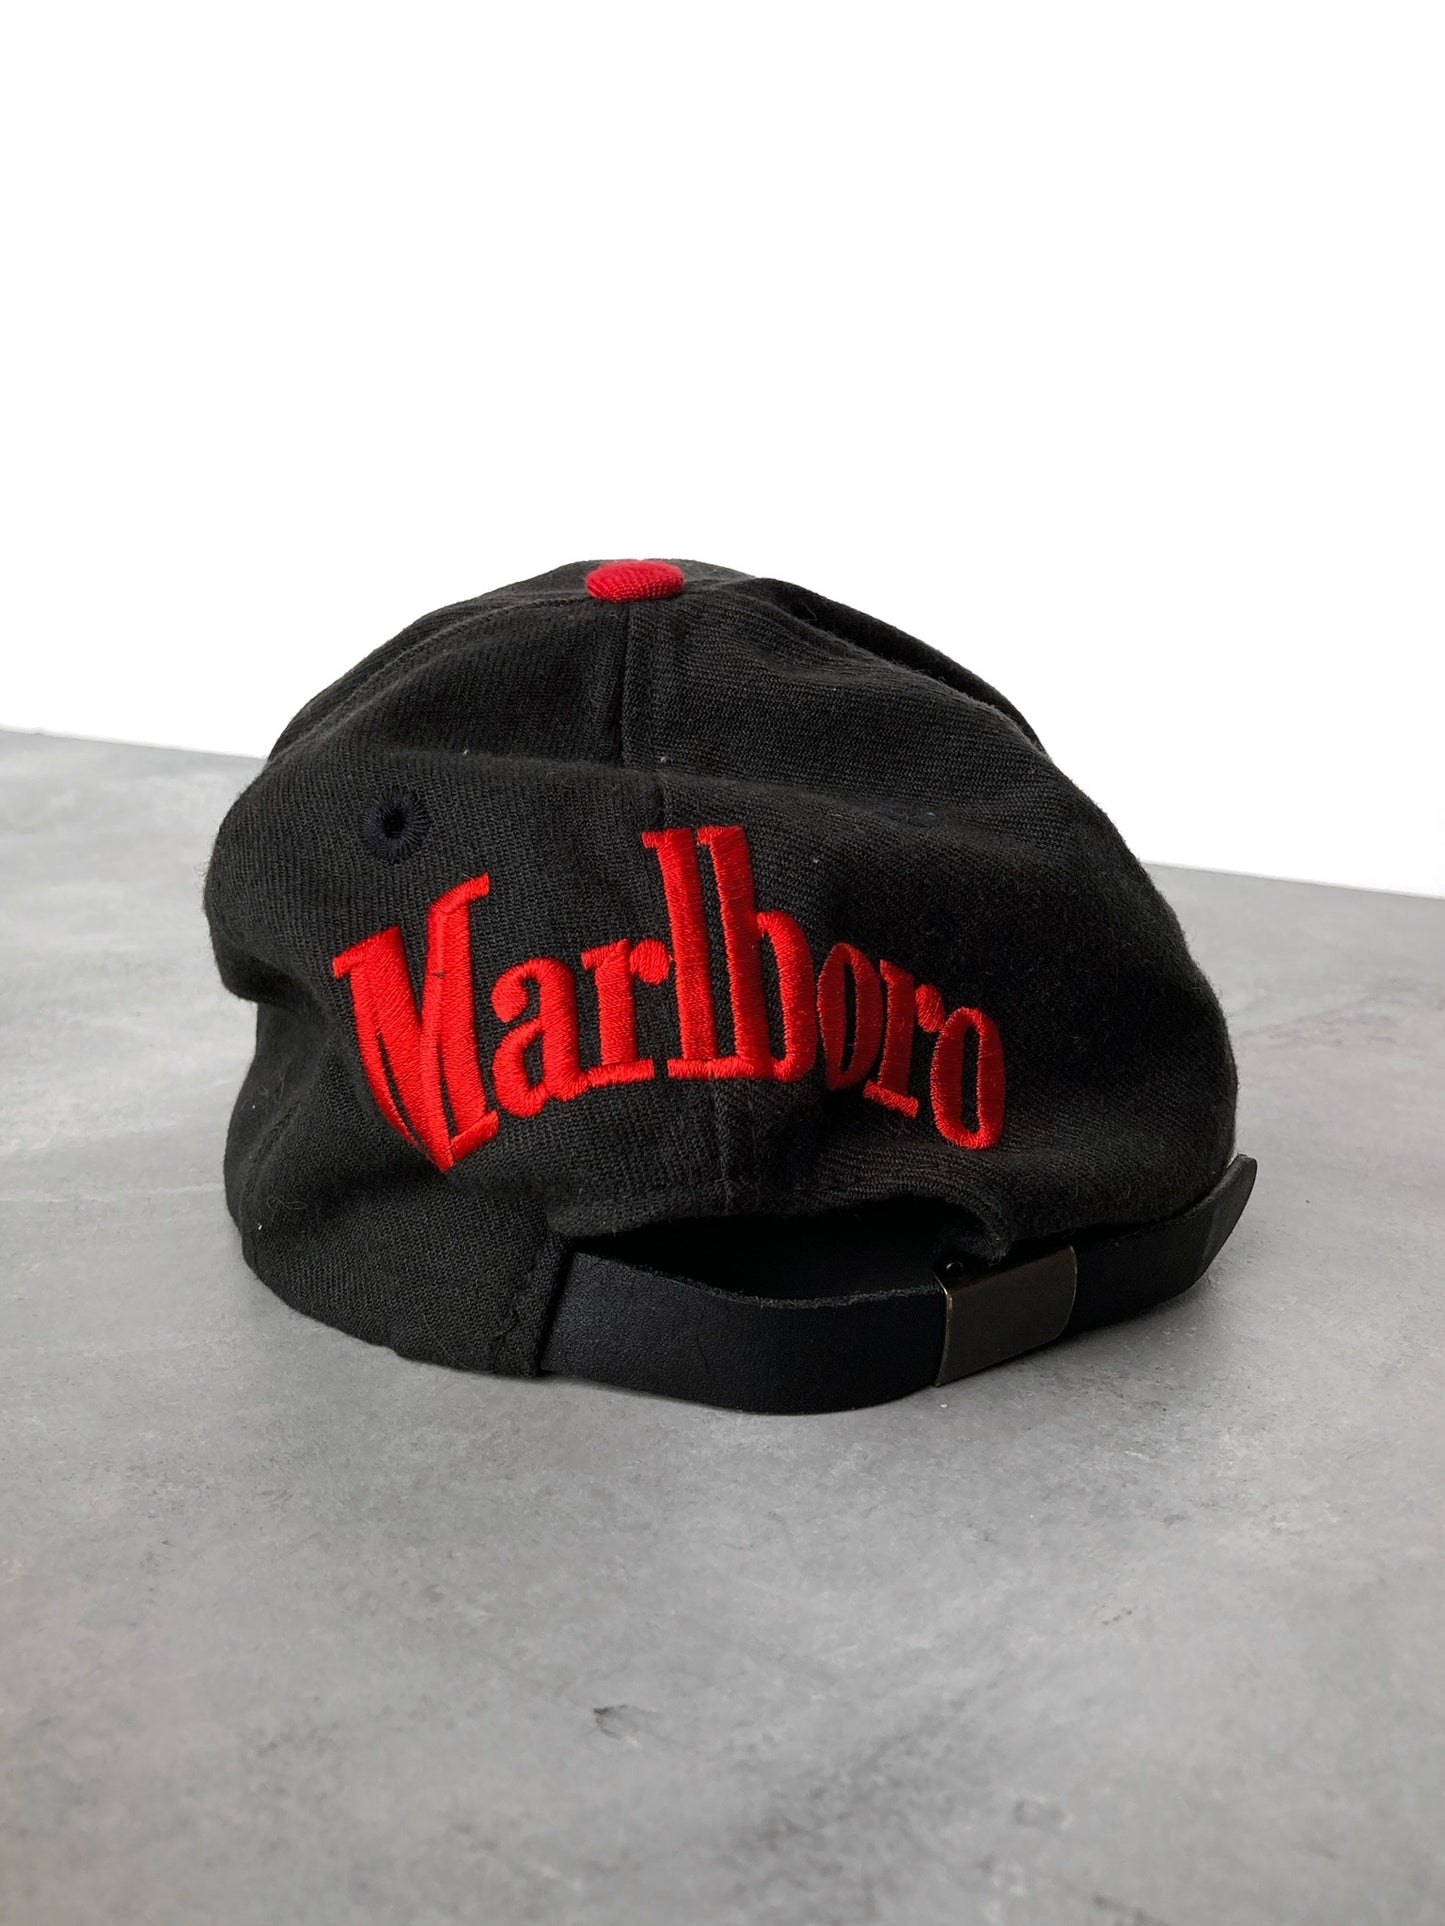 Lizard Rock Marlboro Hat 90's